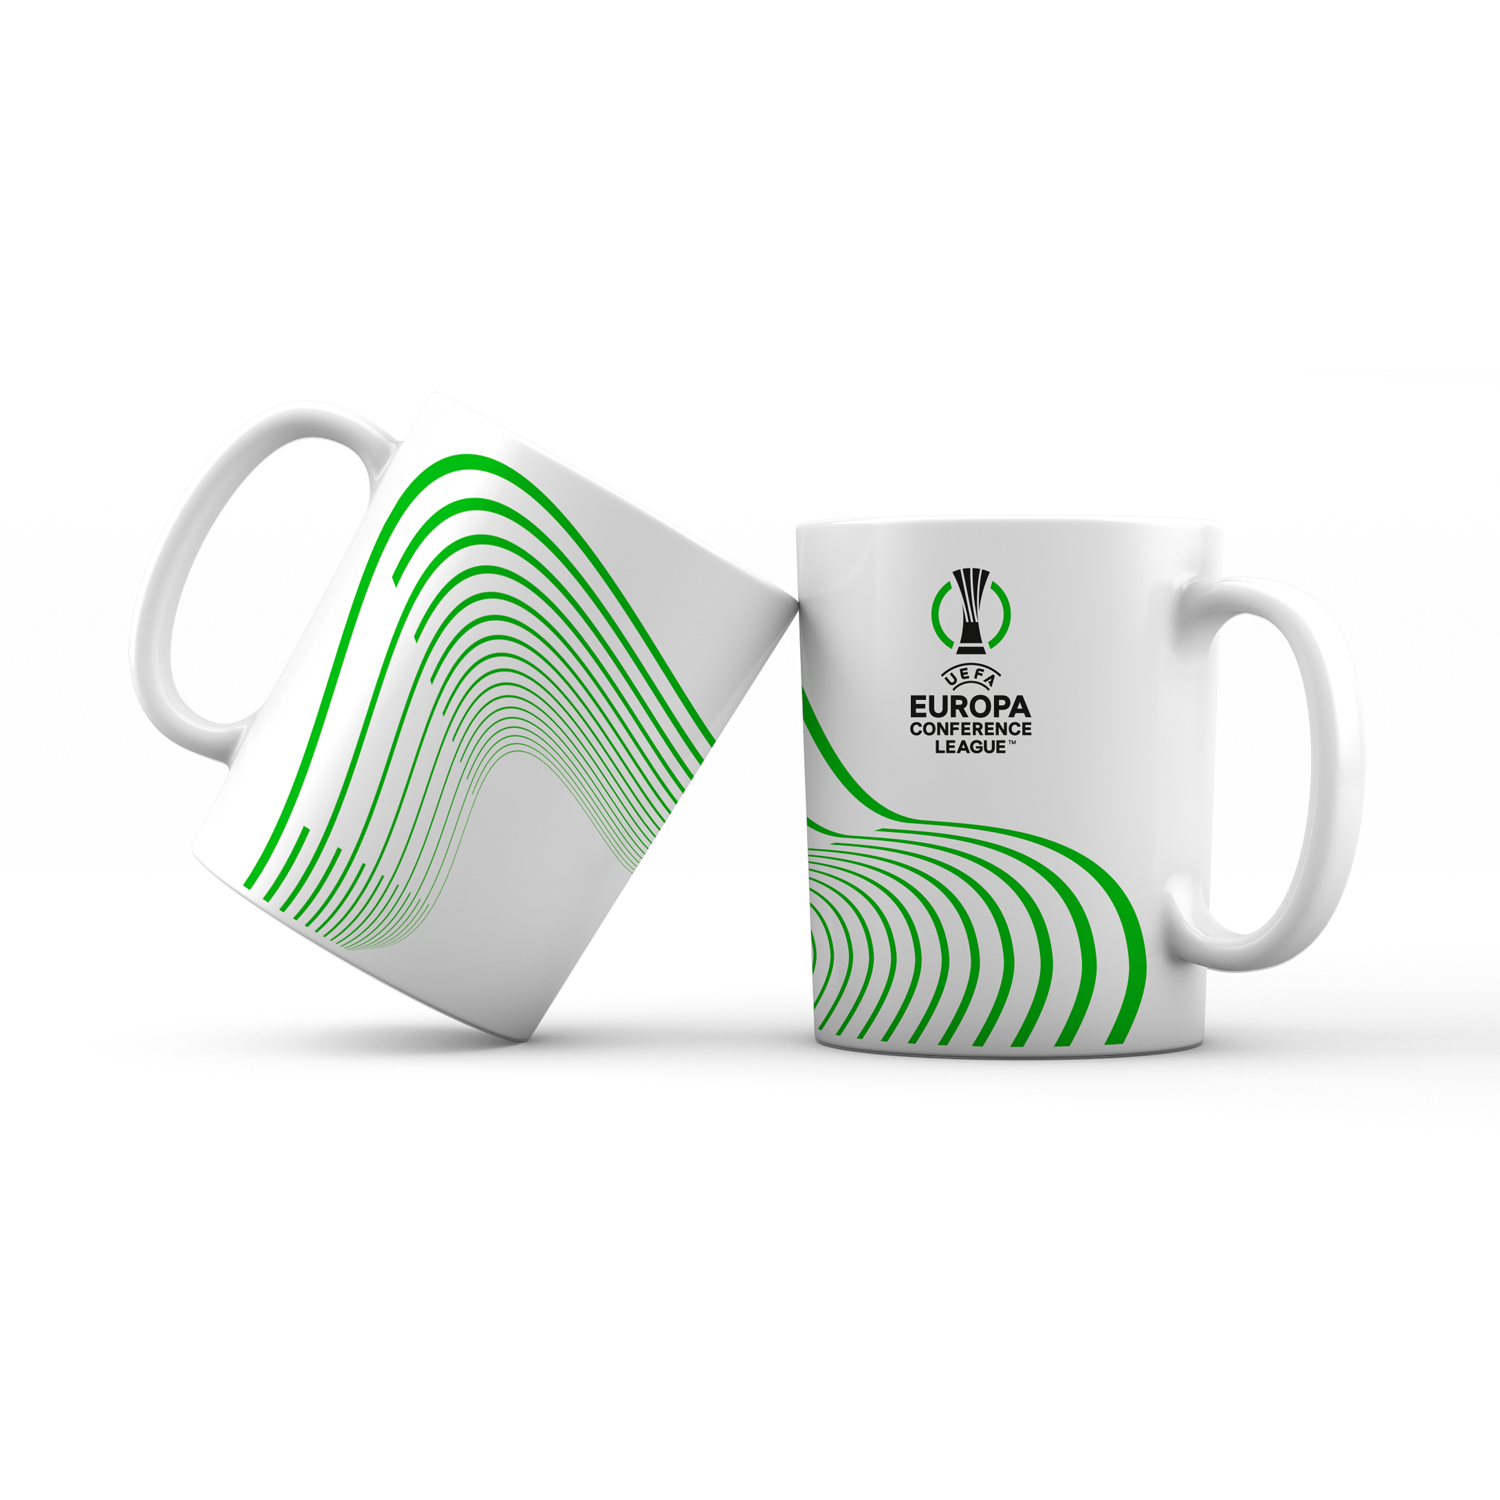 UEFA Europa Conference League Energy Wave Mug UEFA Club Competitions Online Store